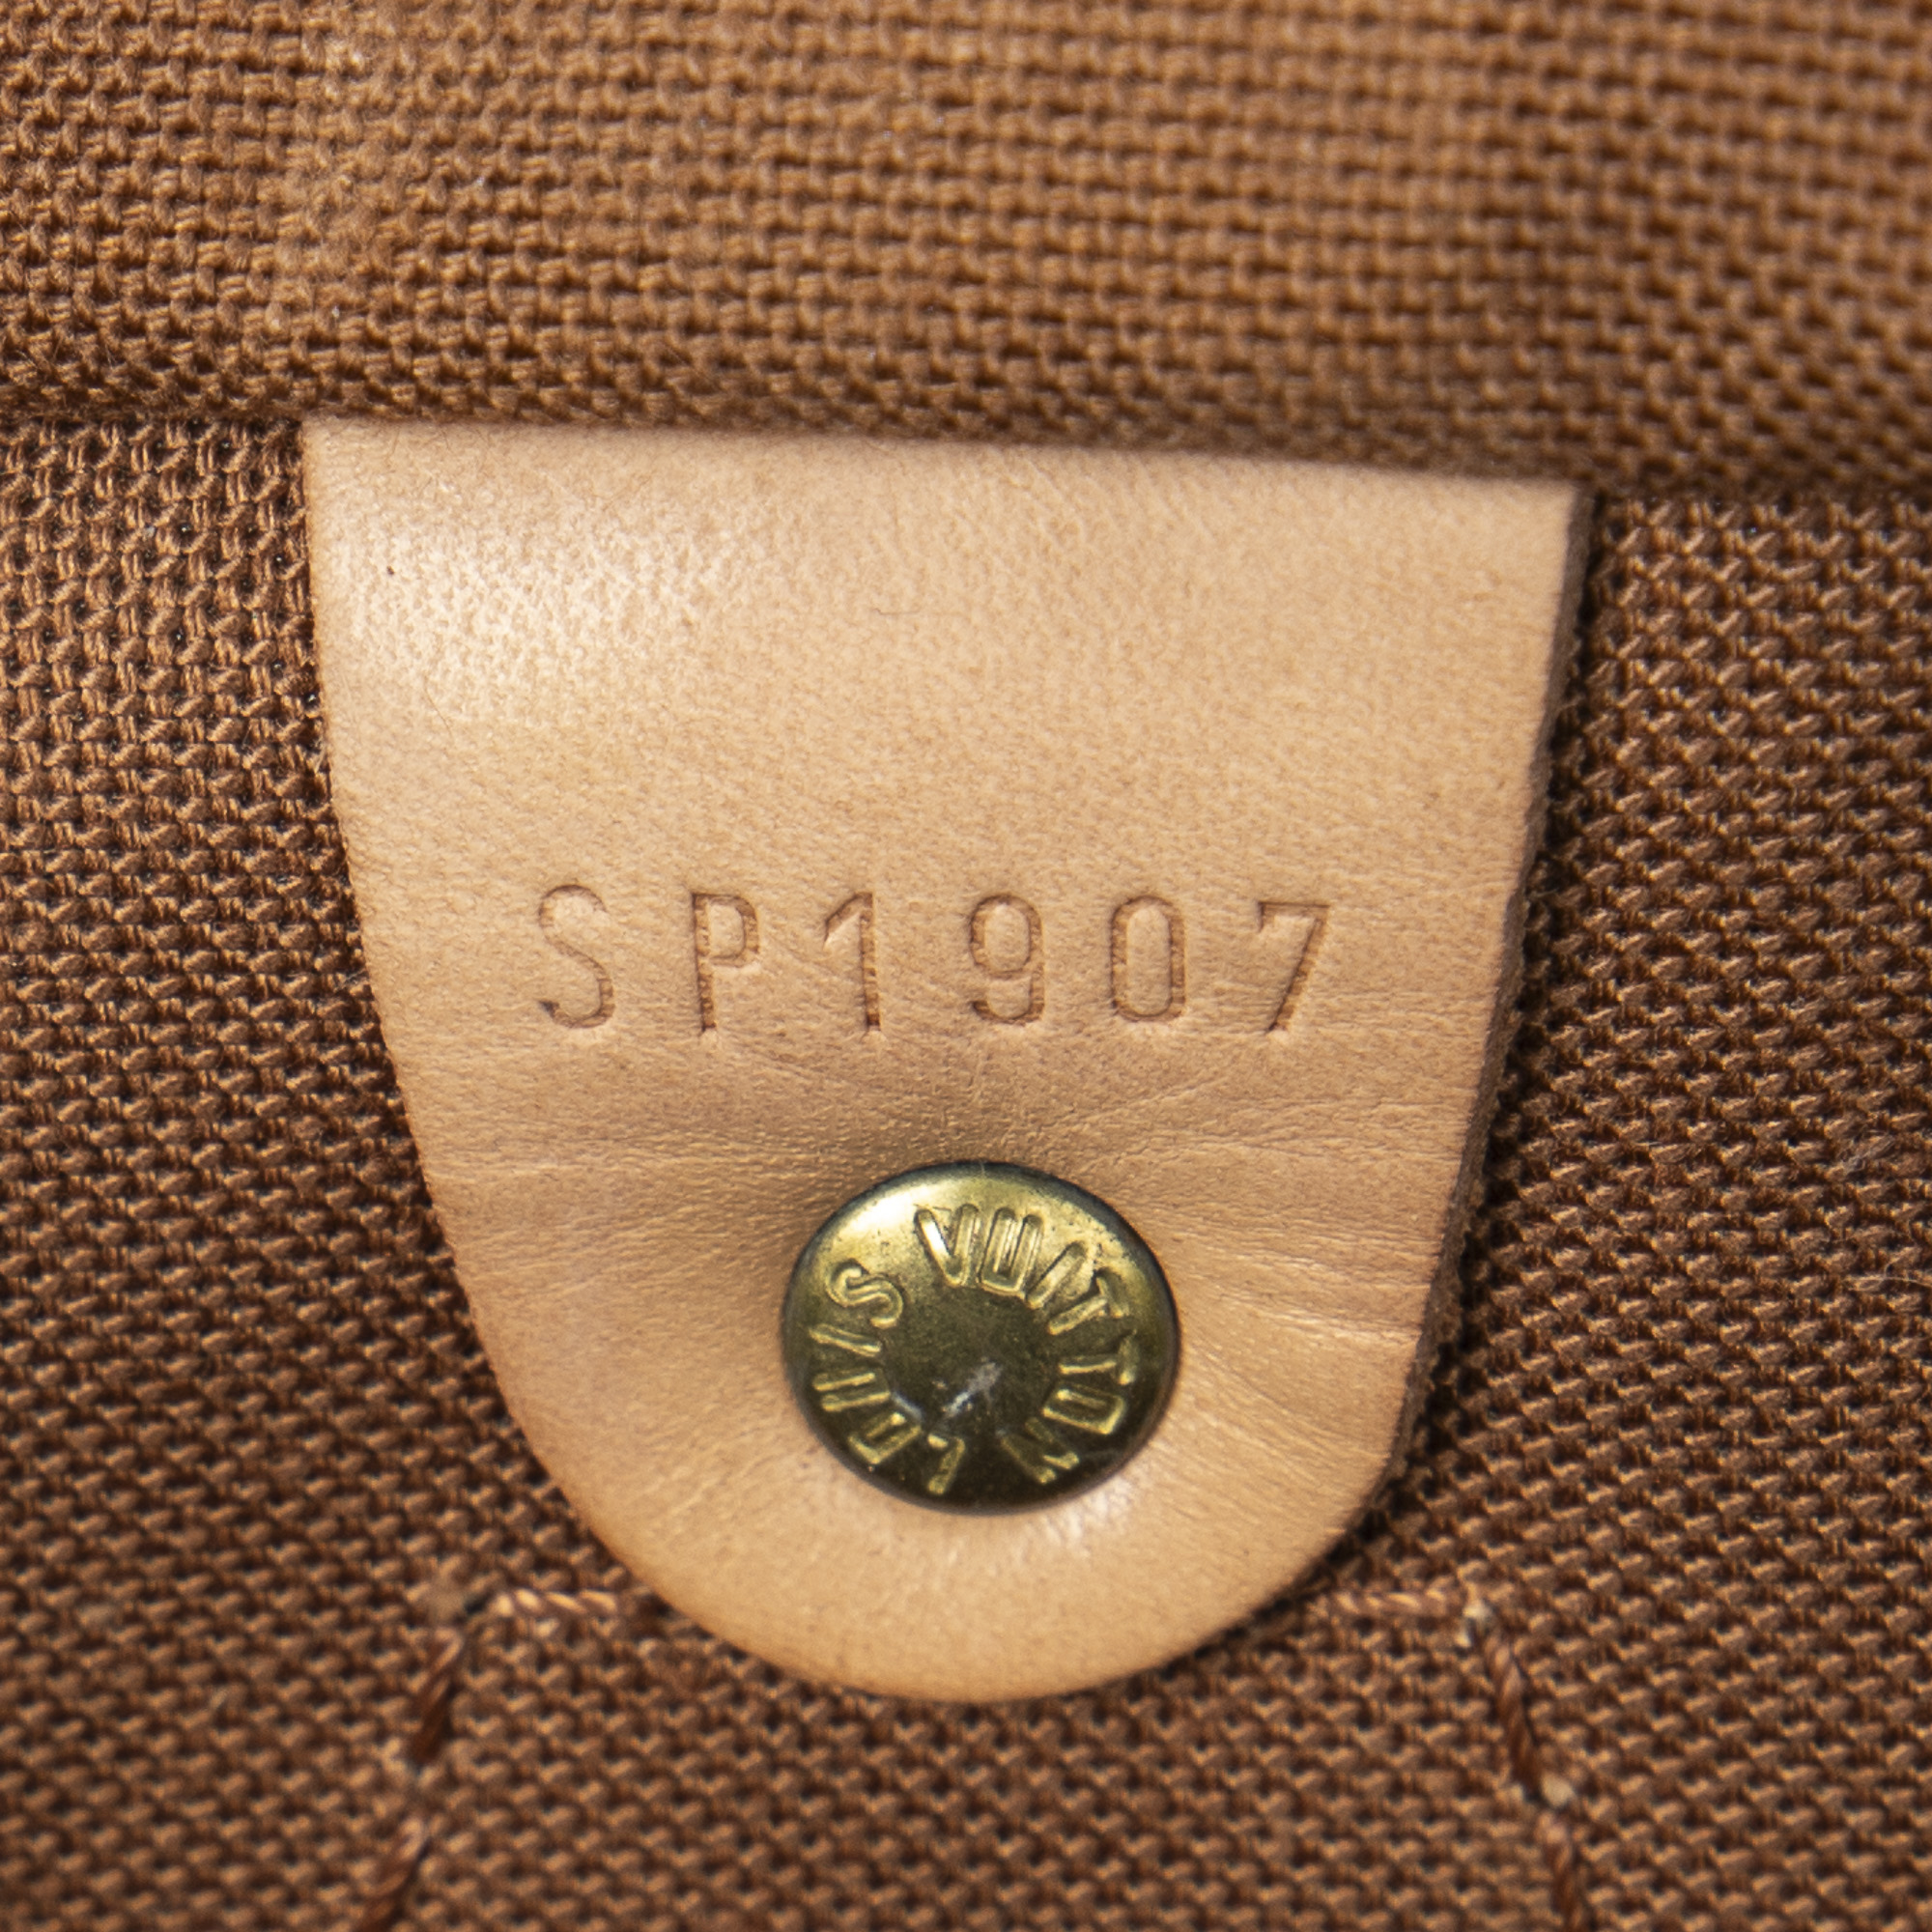 Louis Vuitton Speedy 40 – The Brand Collector